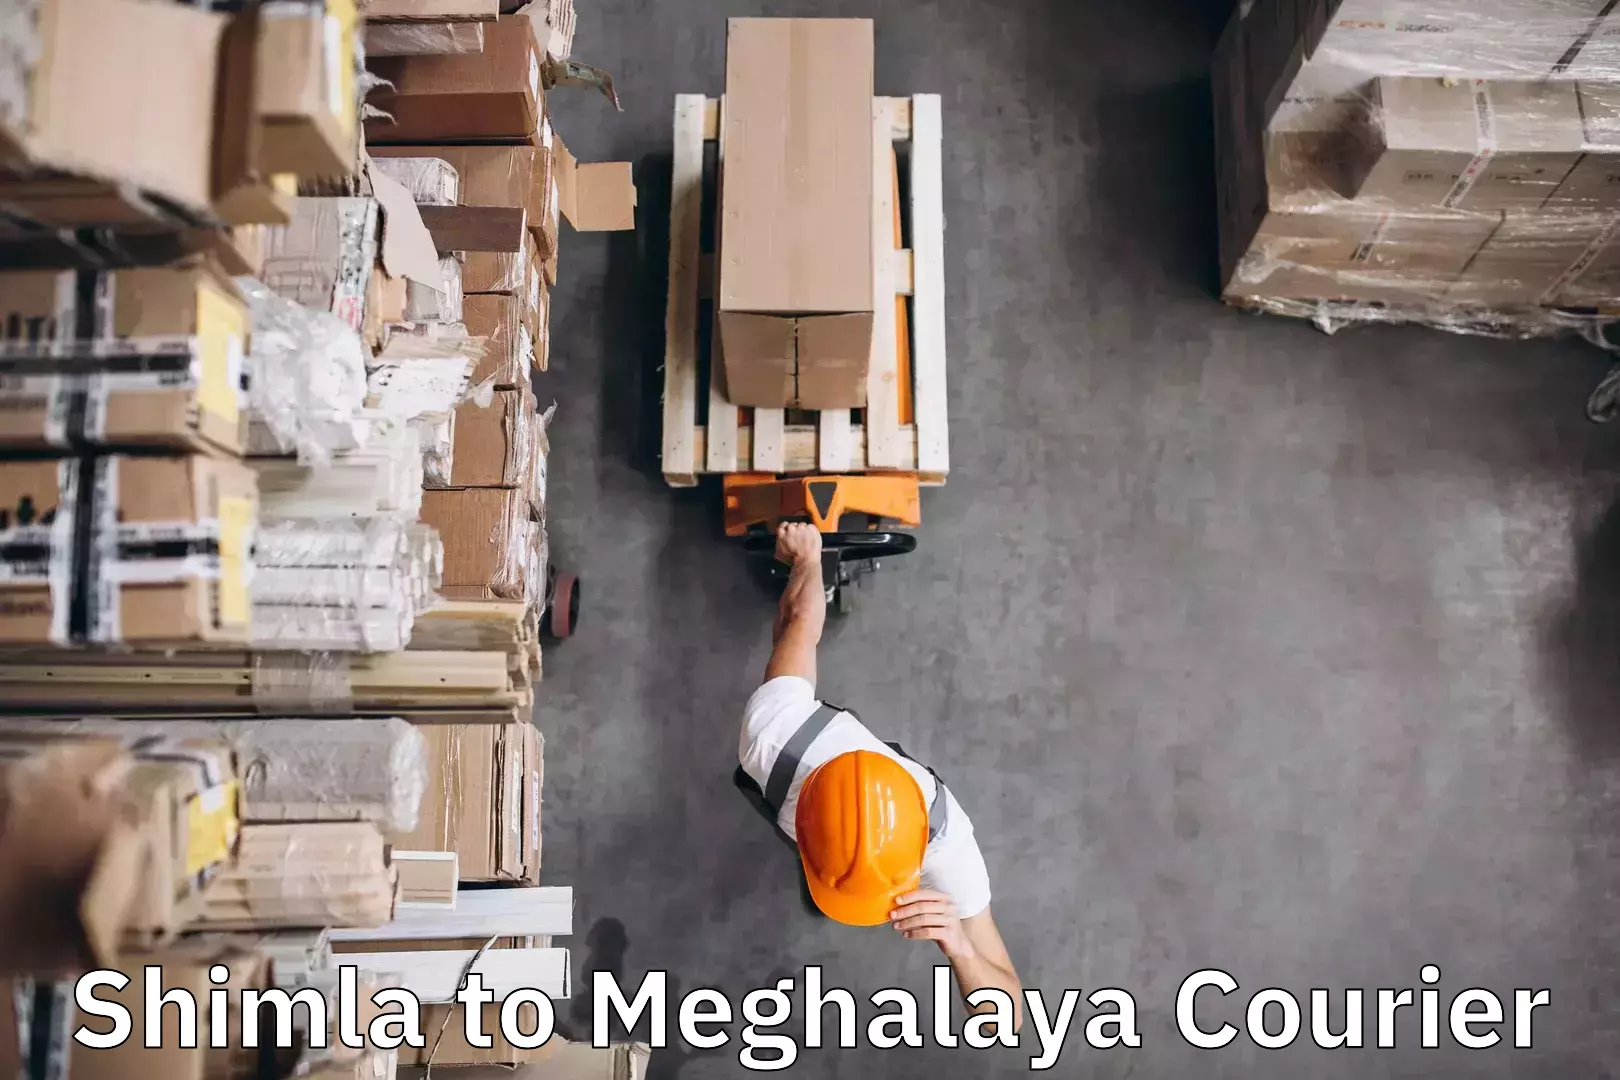 Luggage shipment specialists Shimla to Meghalaya